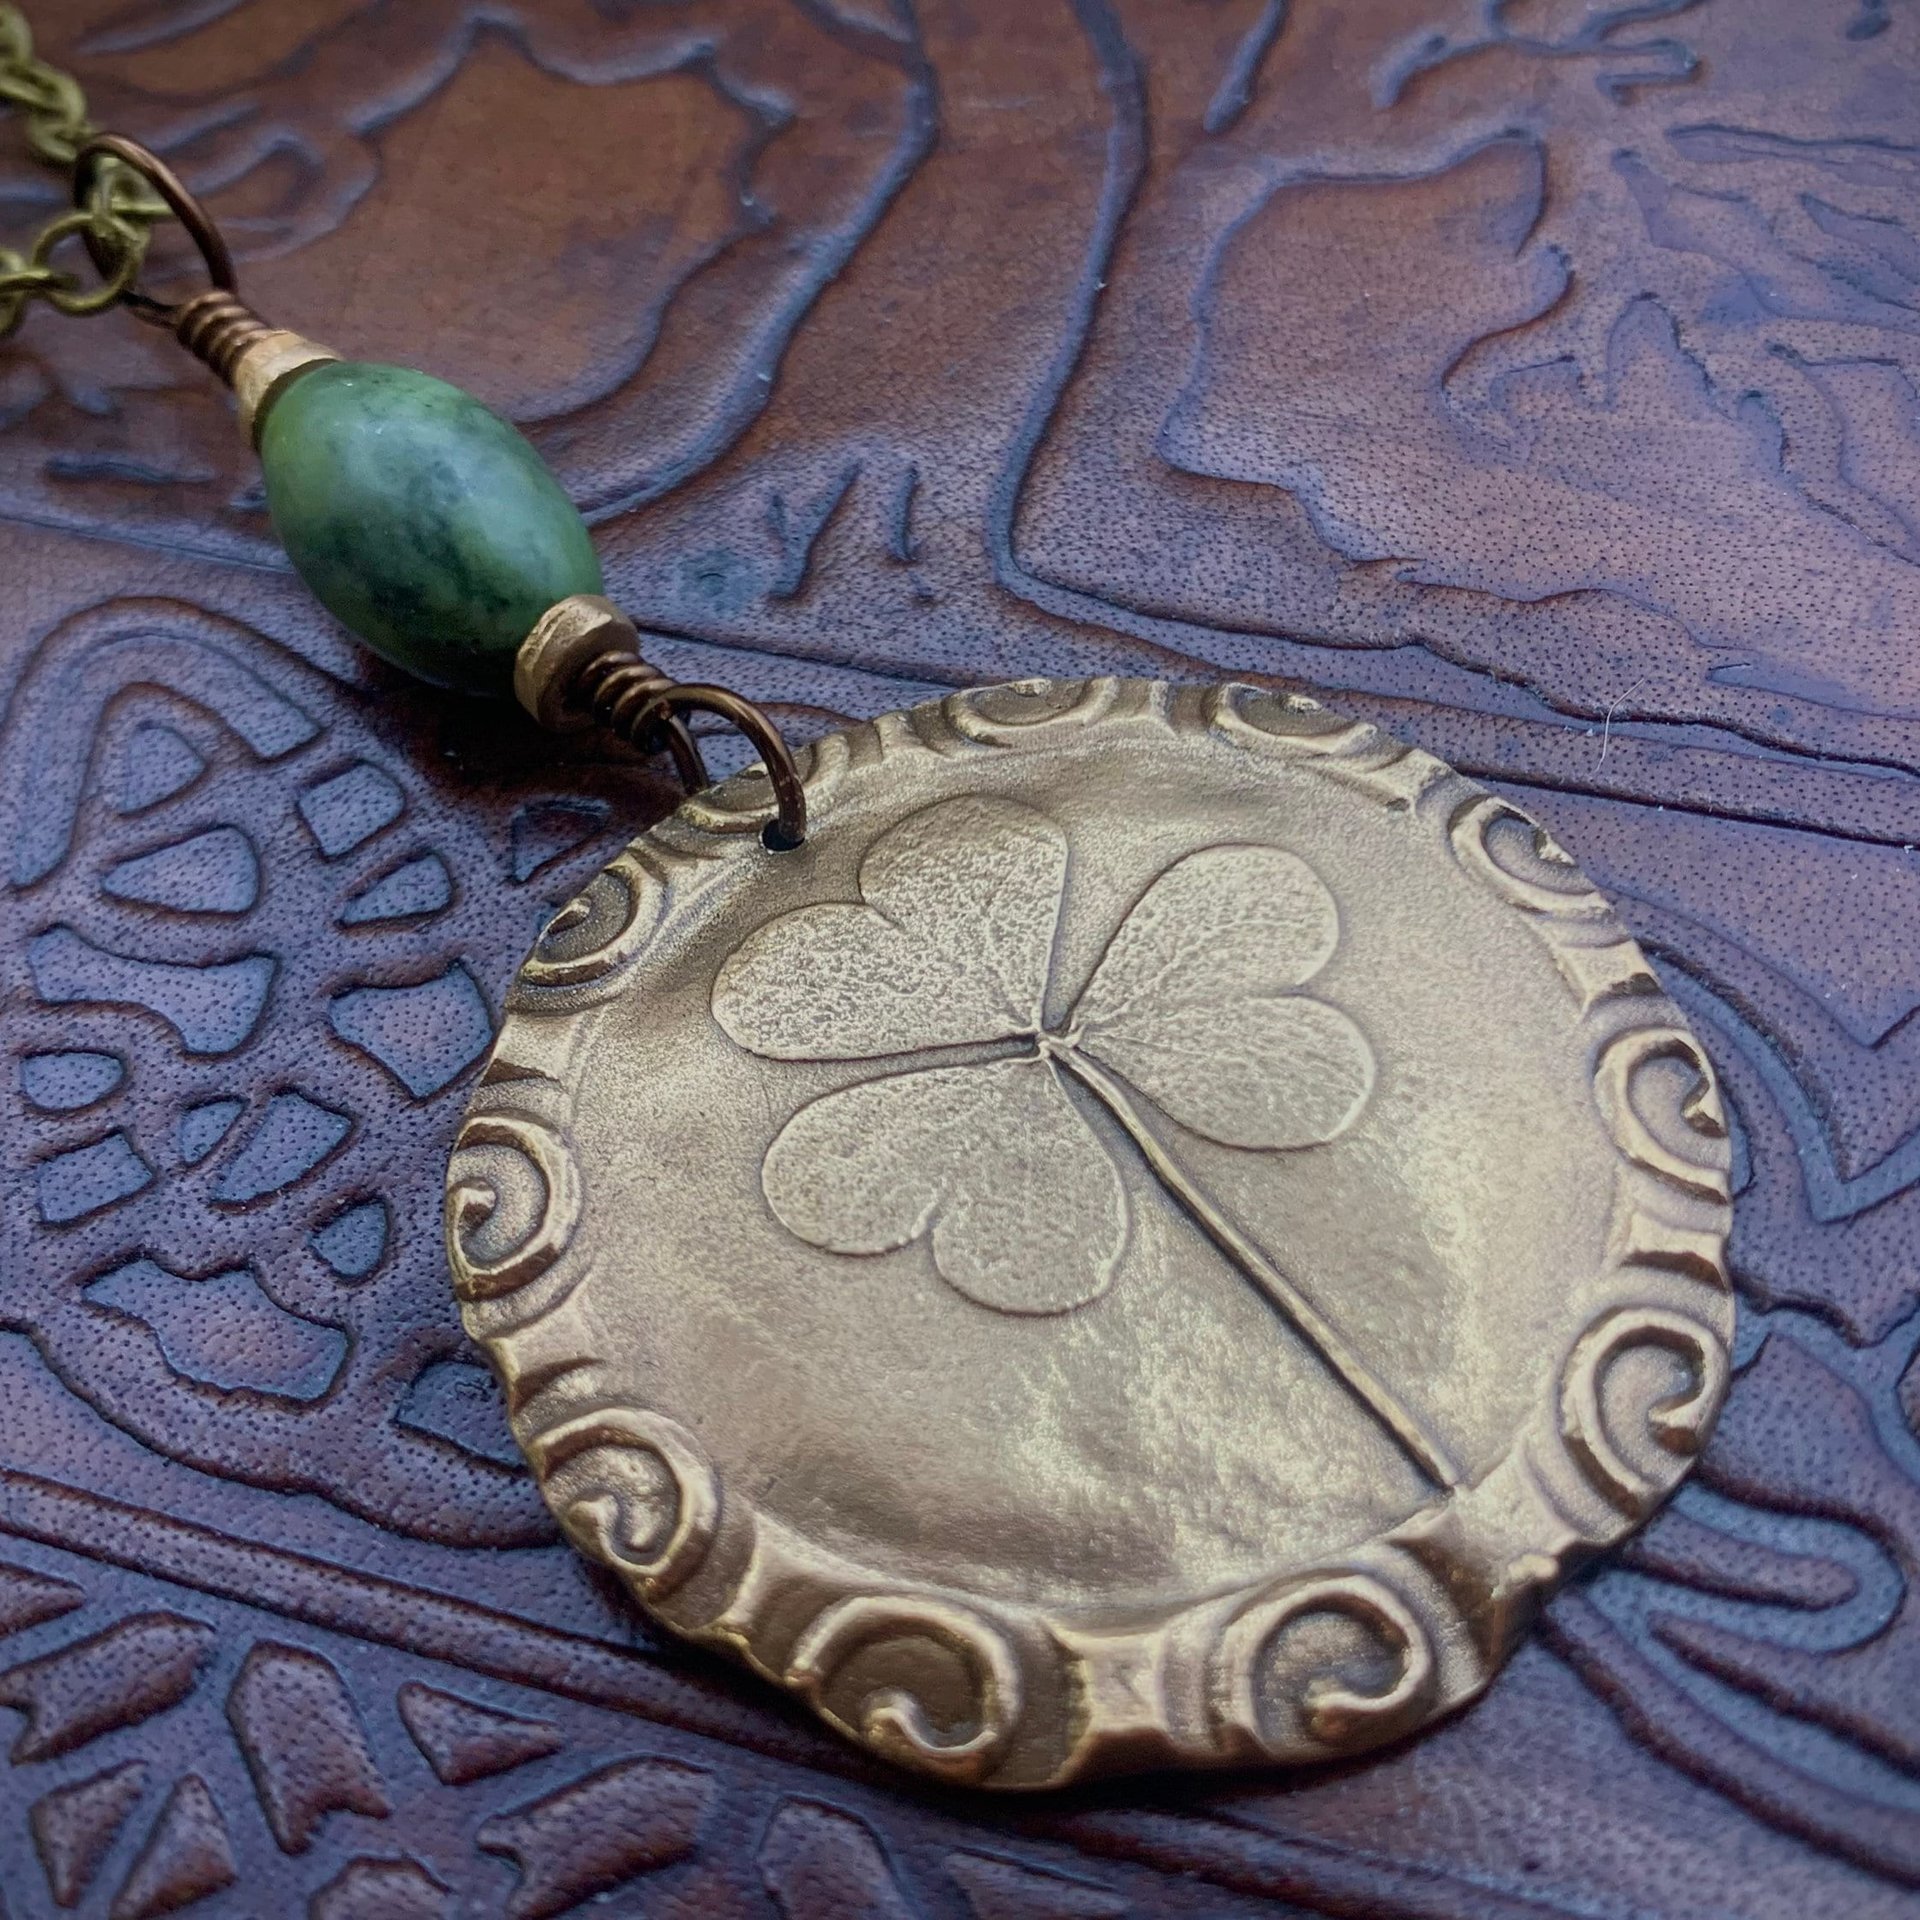 Shamrock Pendant, Connemara Marble Necklace, Irish Celtic Spirals, Bronze 8th Anniversary, Irish Clover, Leather Vegan Cords, Antiqued Chain